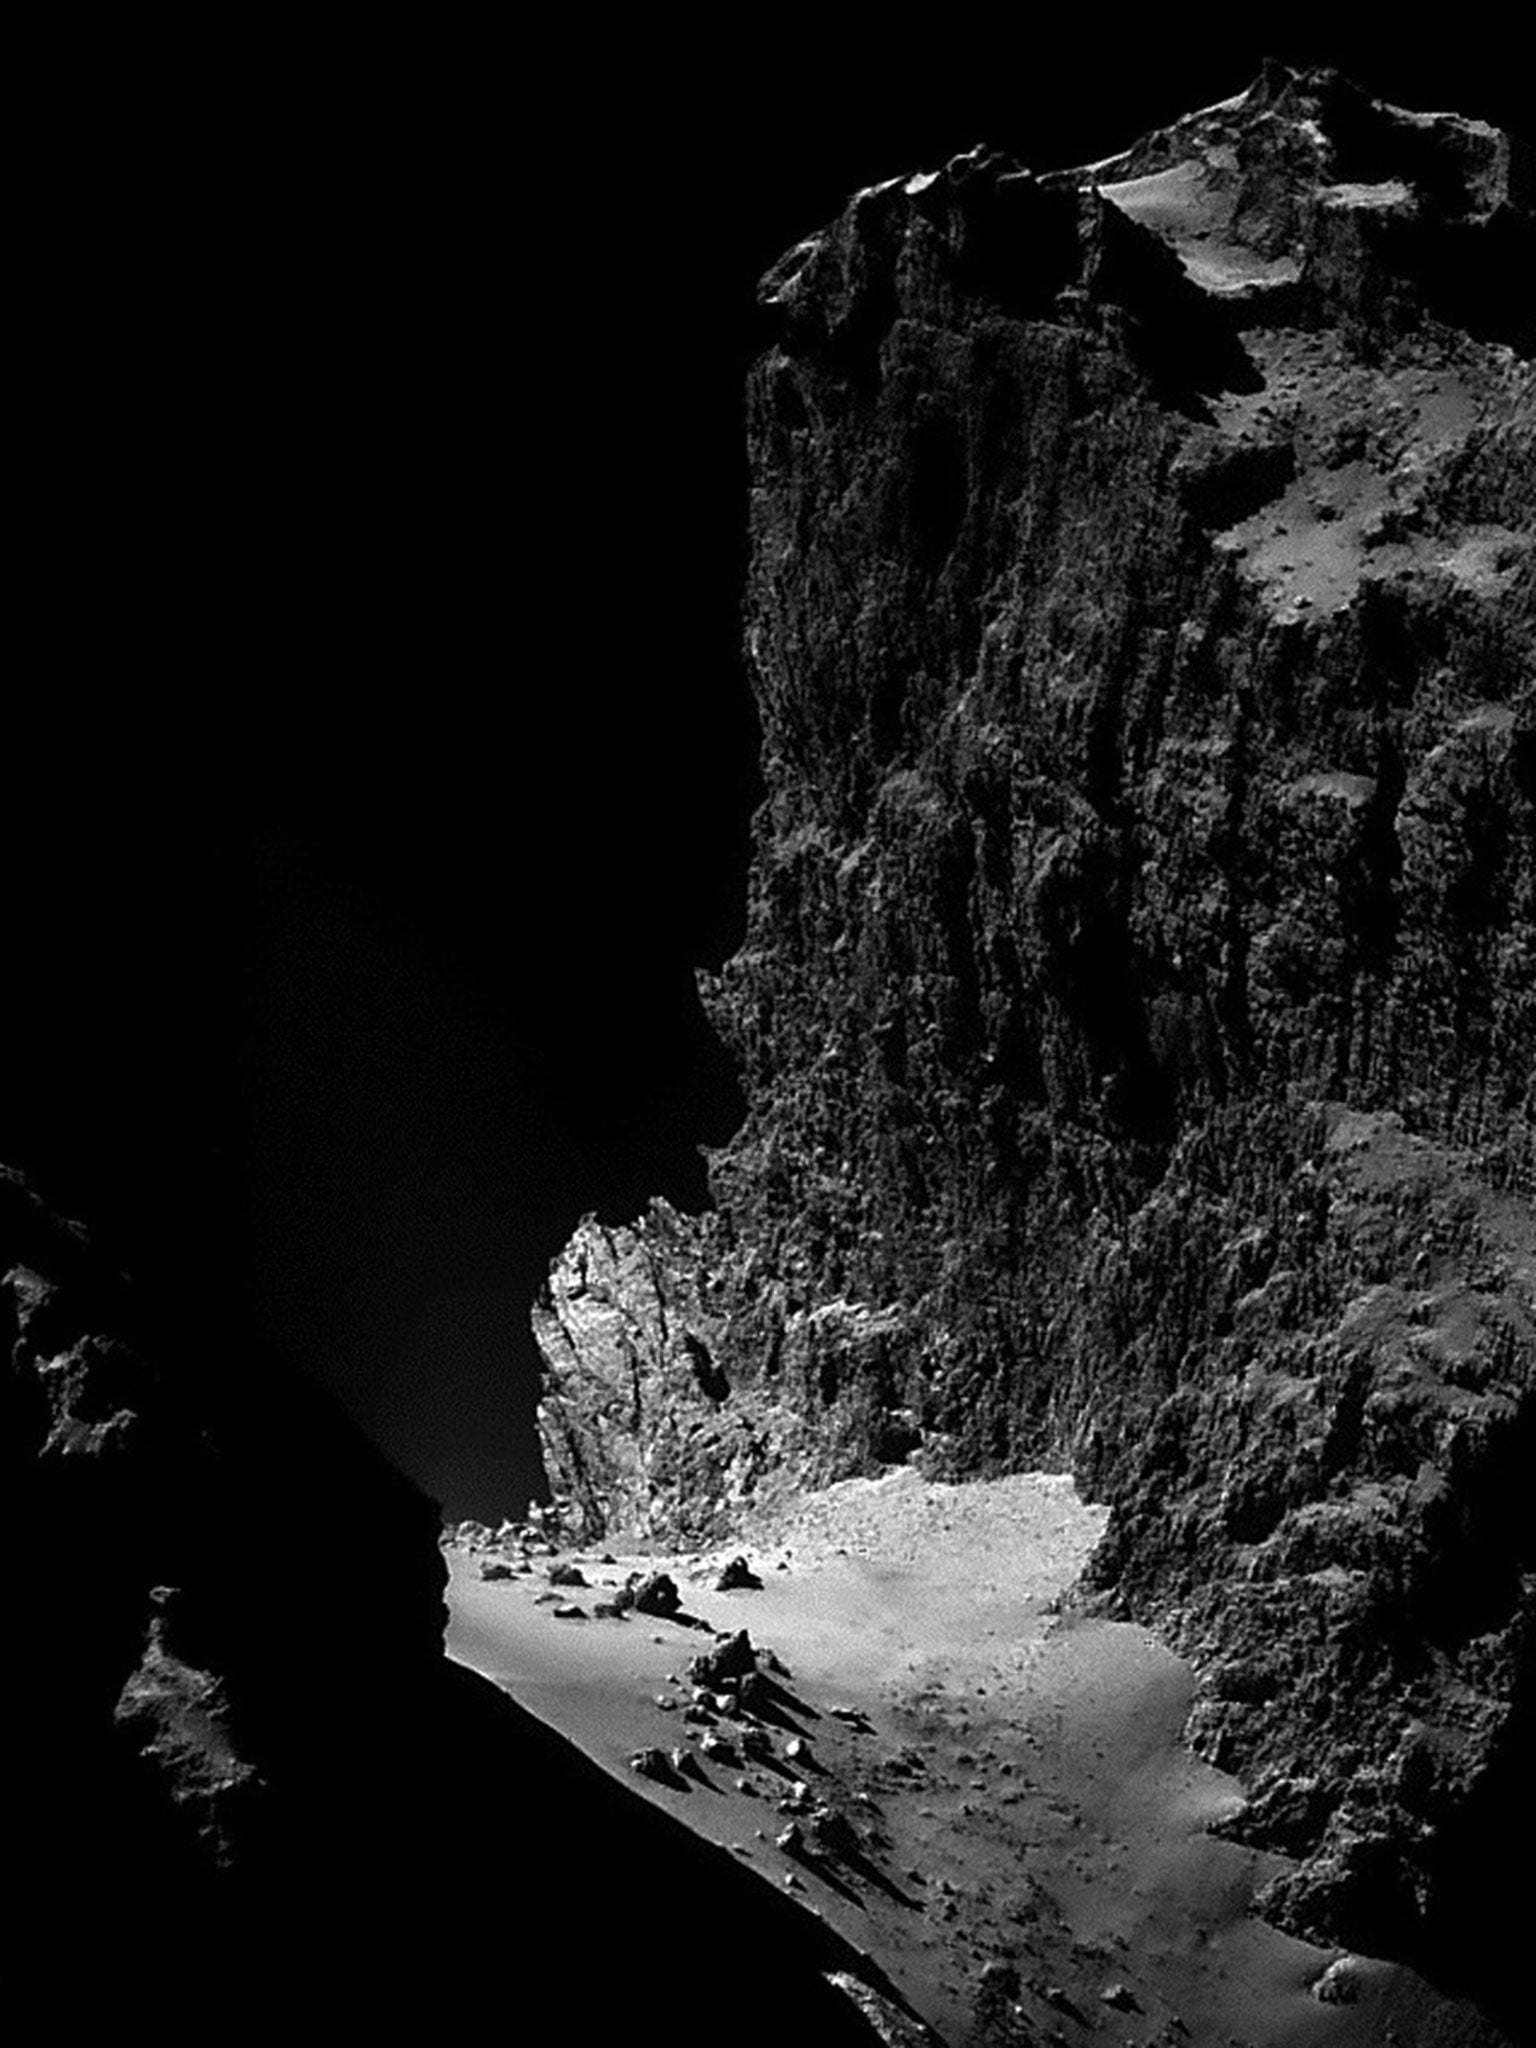 The steep, ragged cliffs and boulder-strewn terrains on the surface of Comet Churyumov–Gerasimenko